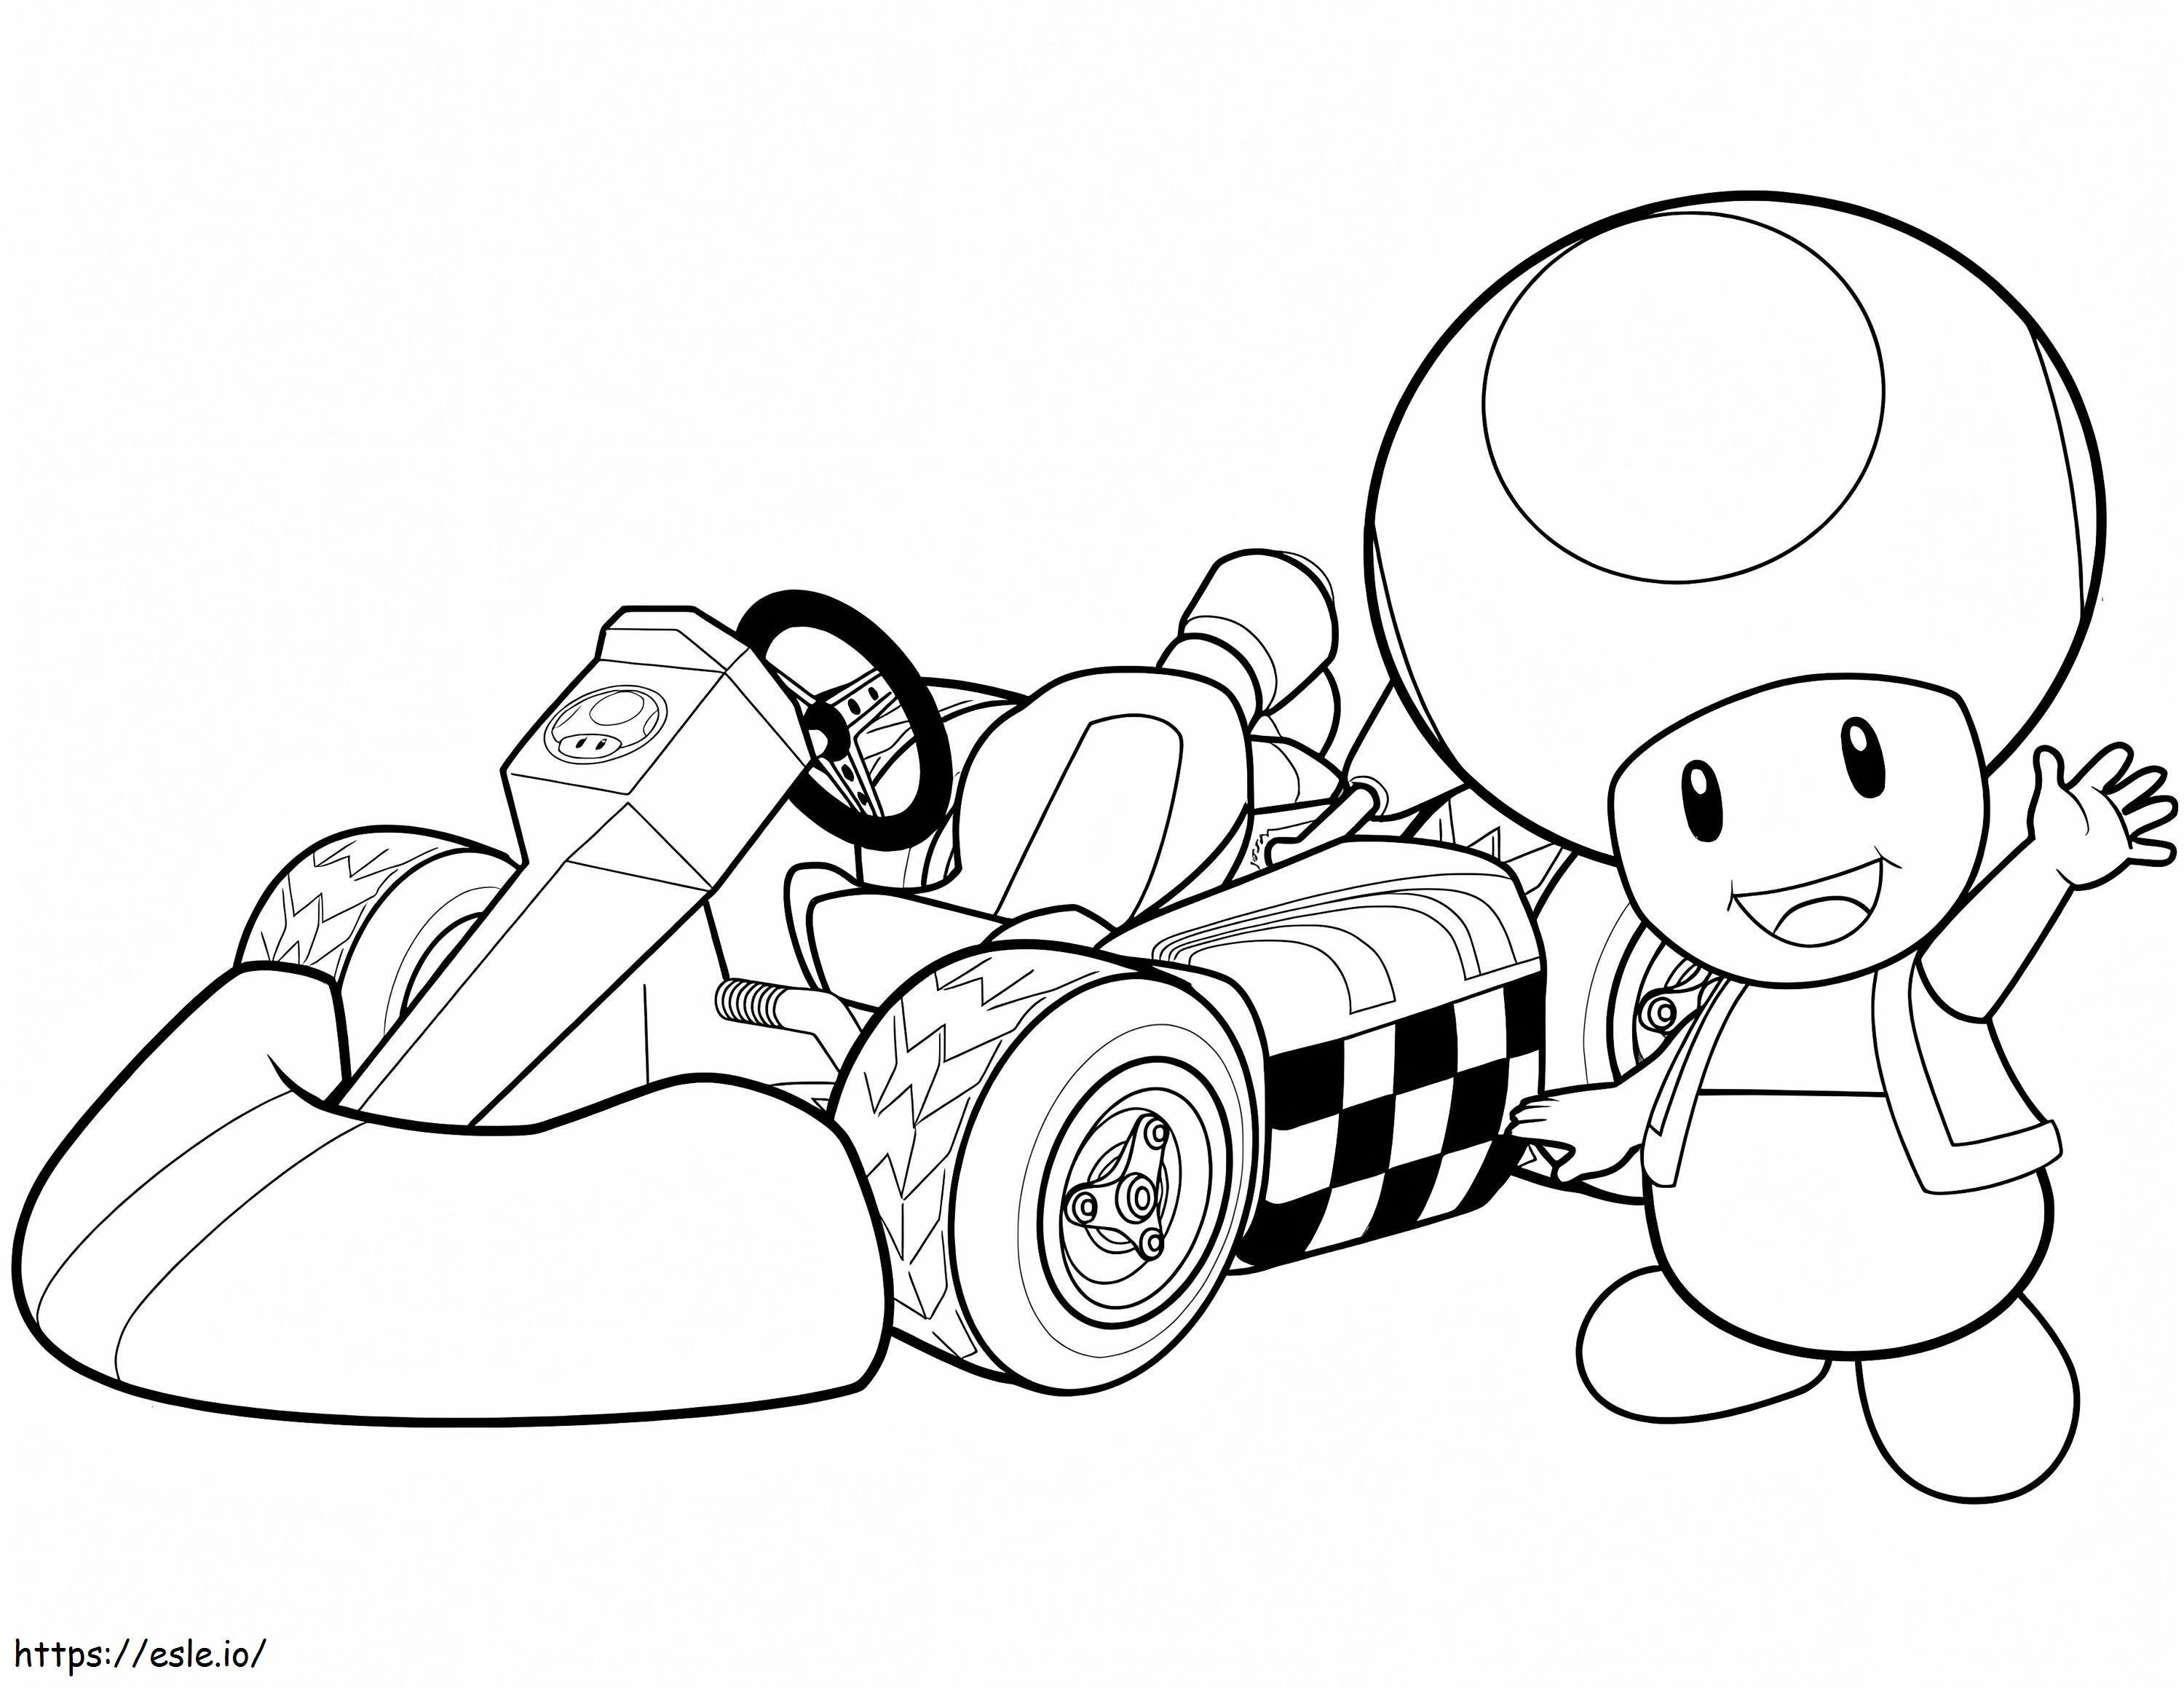 Rana A Mario Kart Wii coloring page